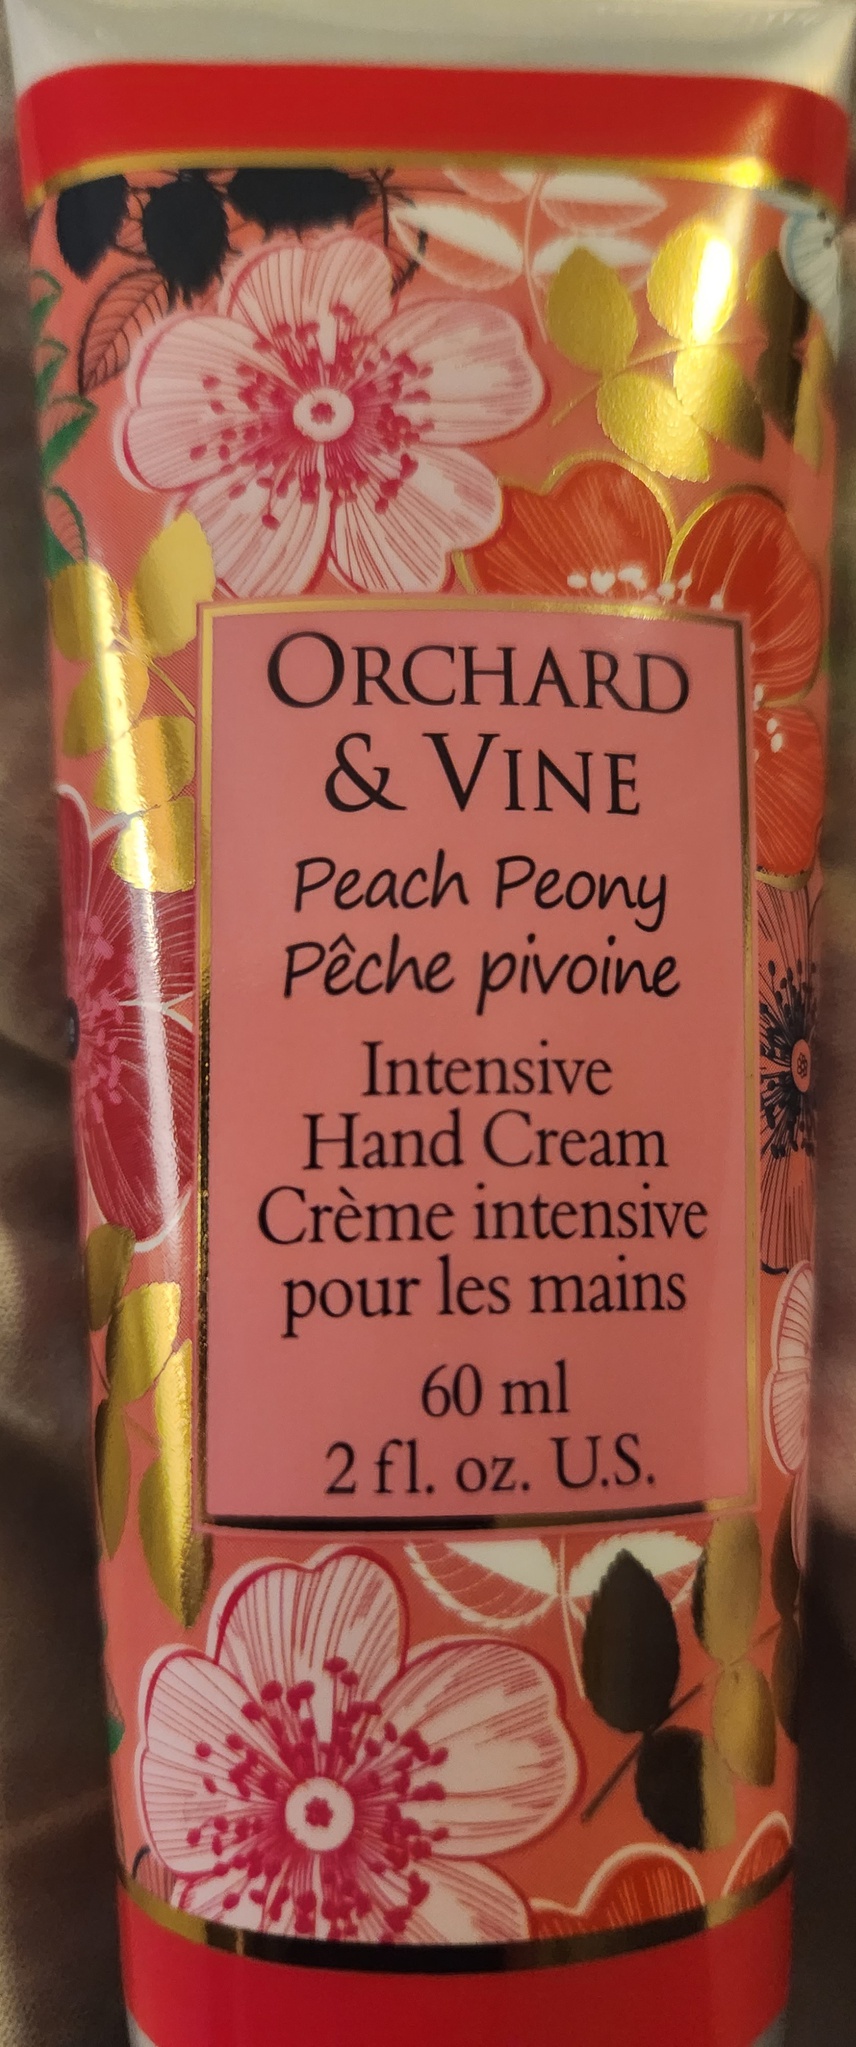 Orchard and Vine Peach Peony Intensive Hand Cream